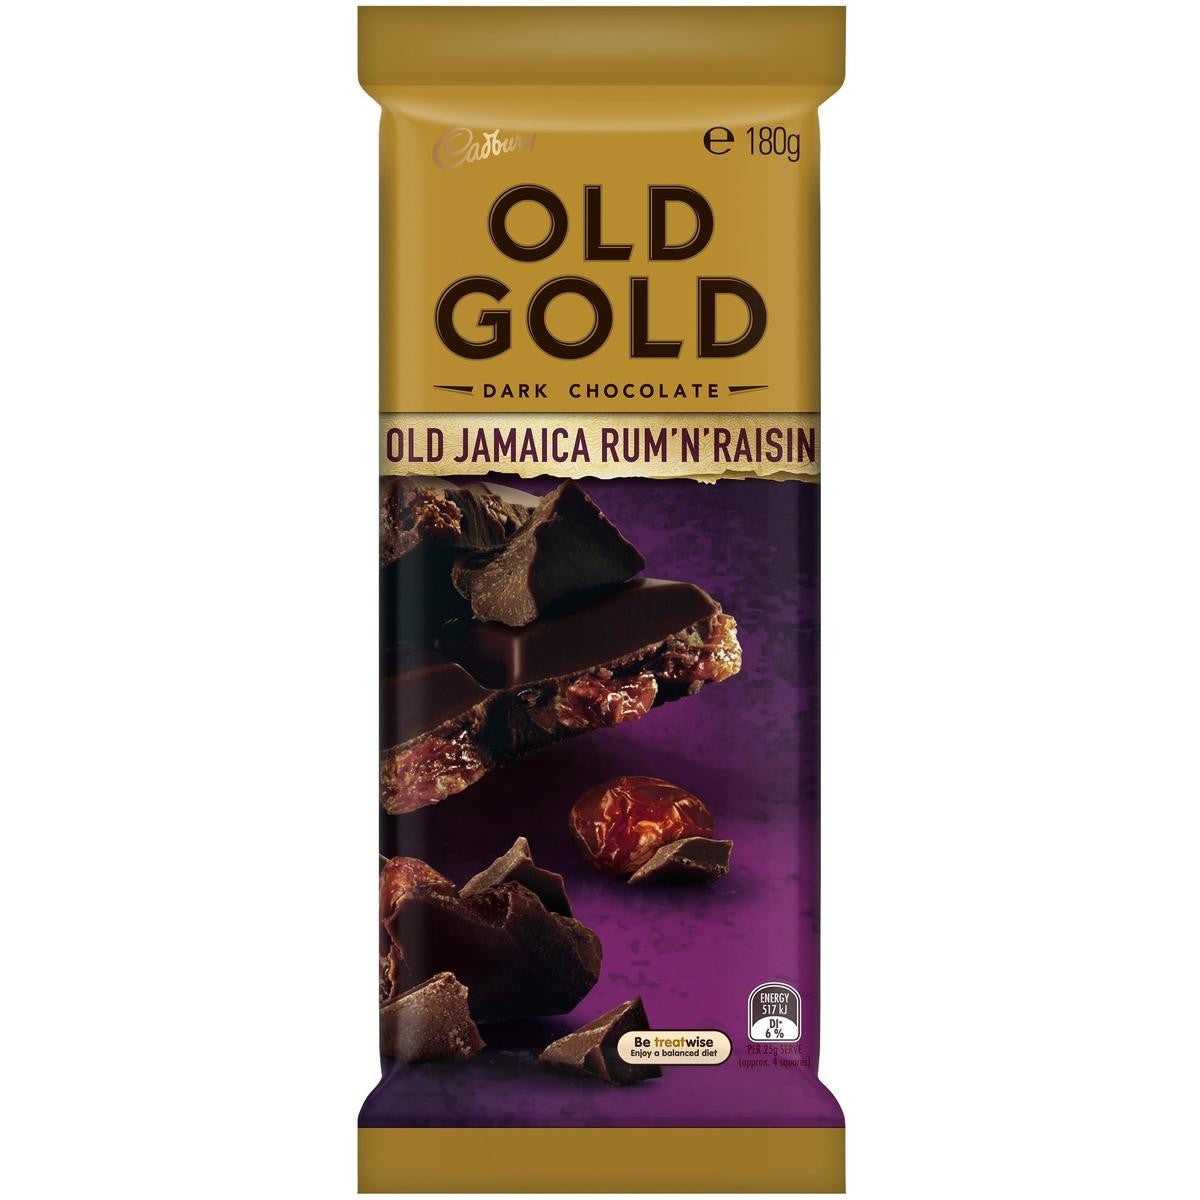 Cadbury Old Gold Dark Chocolate Old Jamaica Rum 'N' Raisin 180G